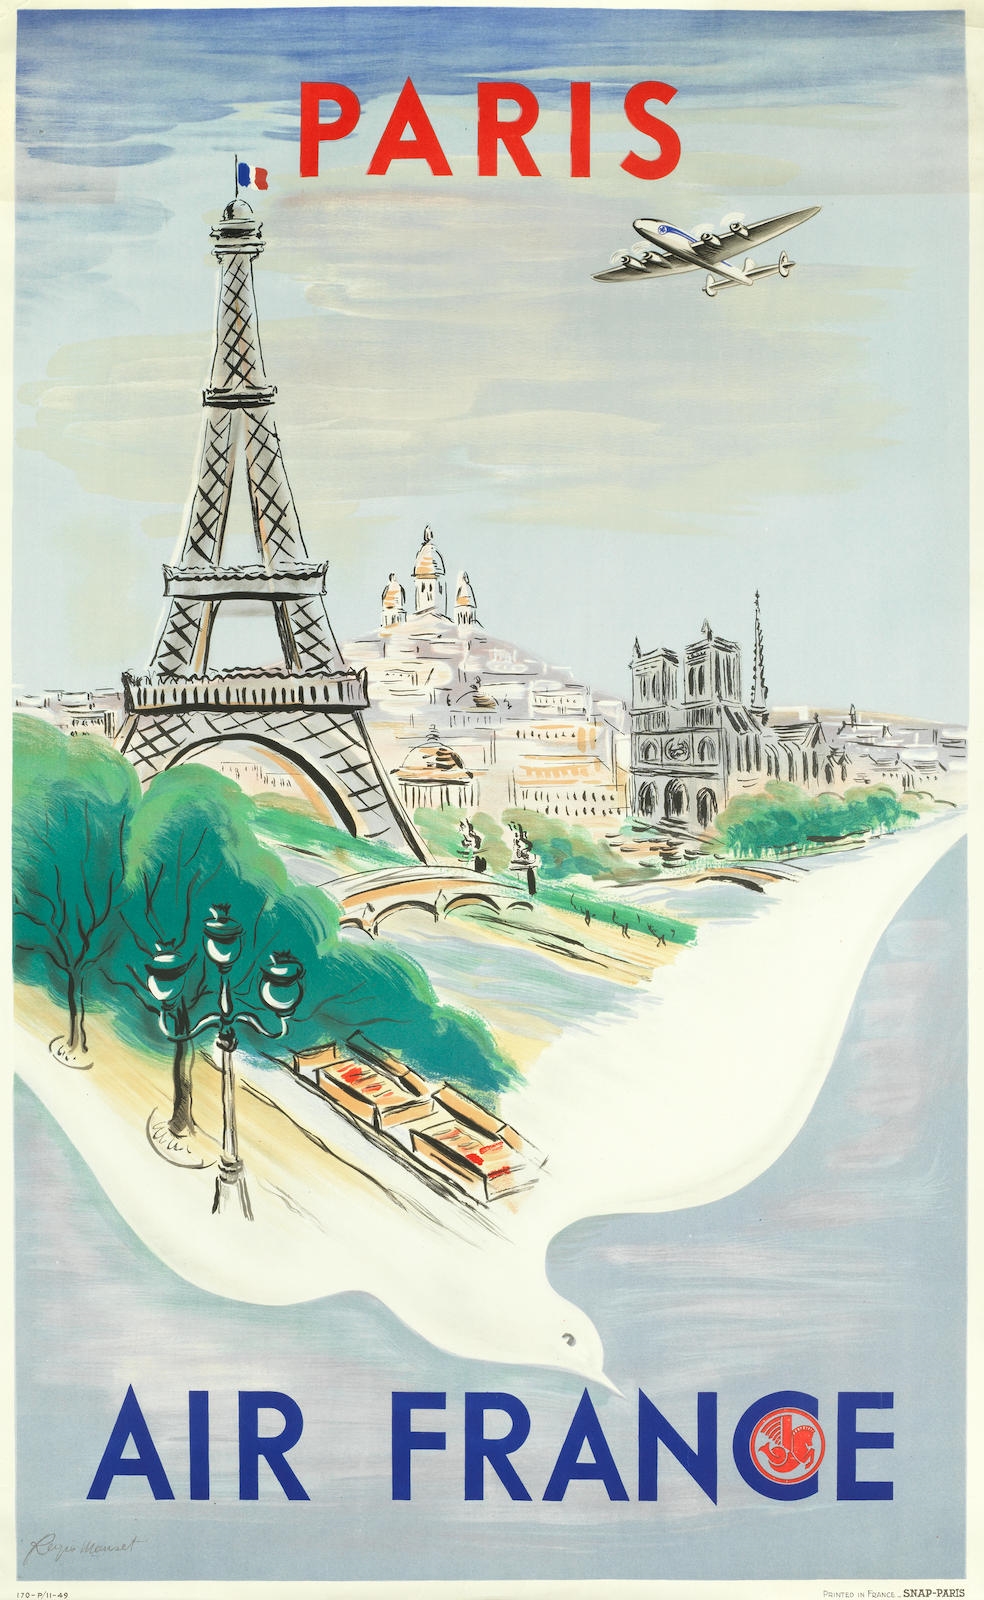 Régis Manset | AIR FRANCE, Paris (1949) | MutualArt